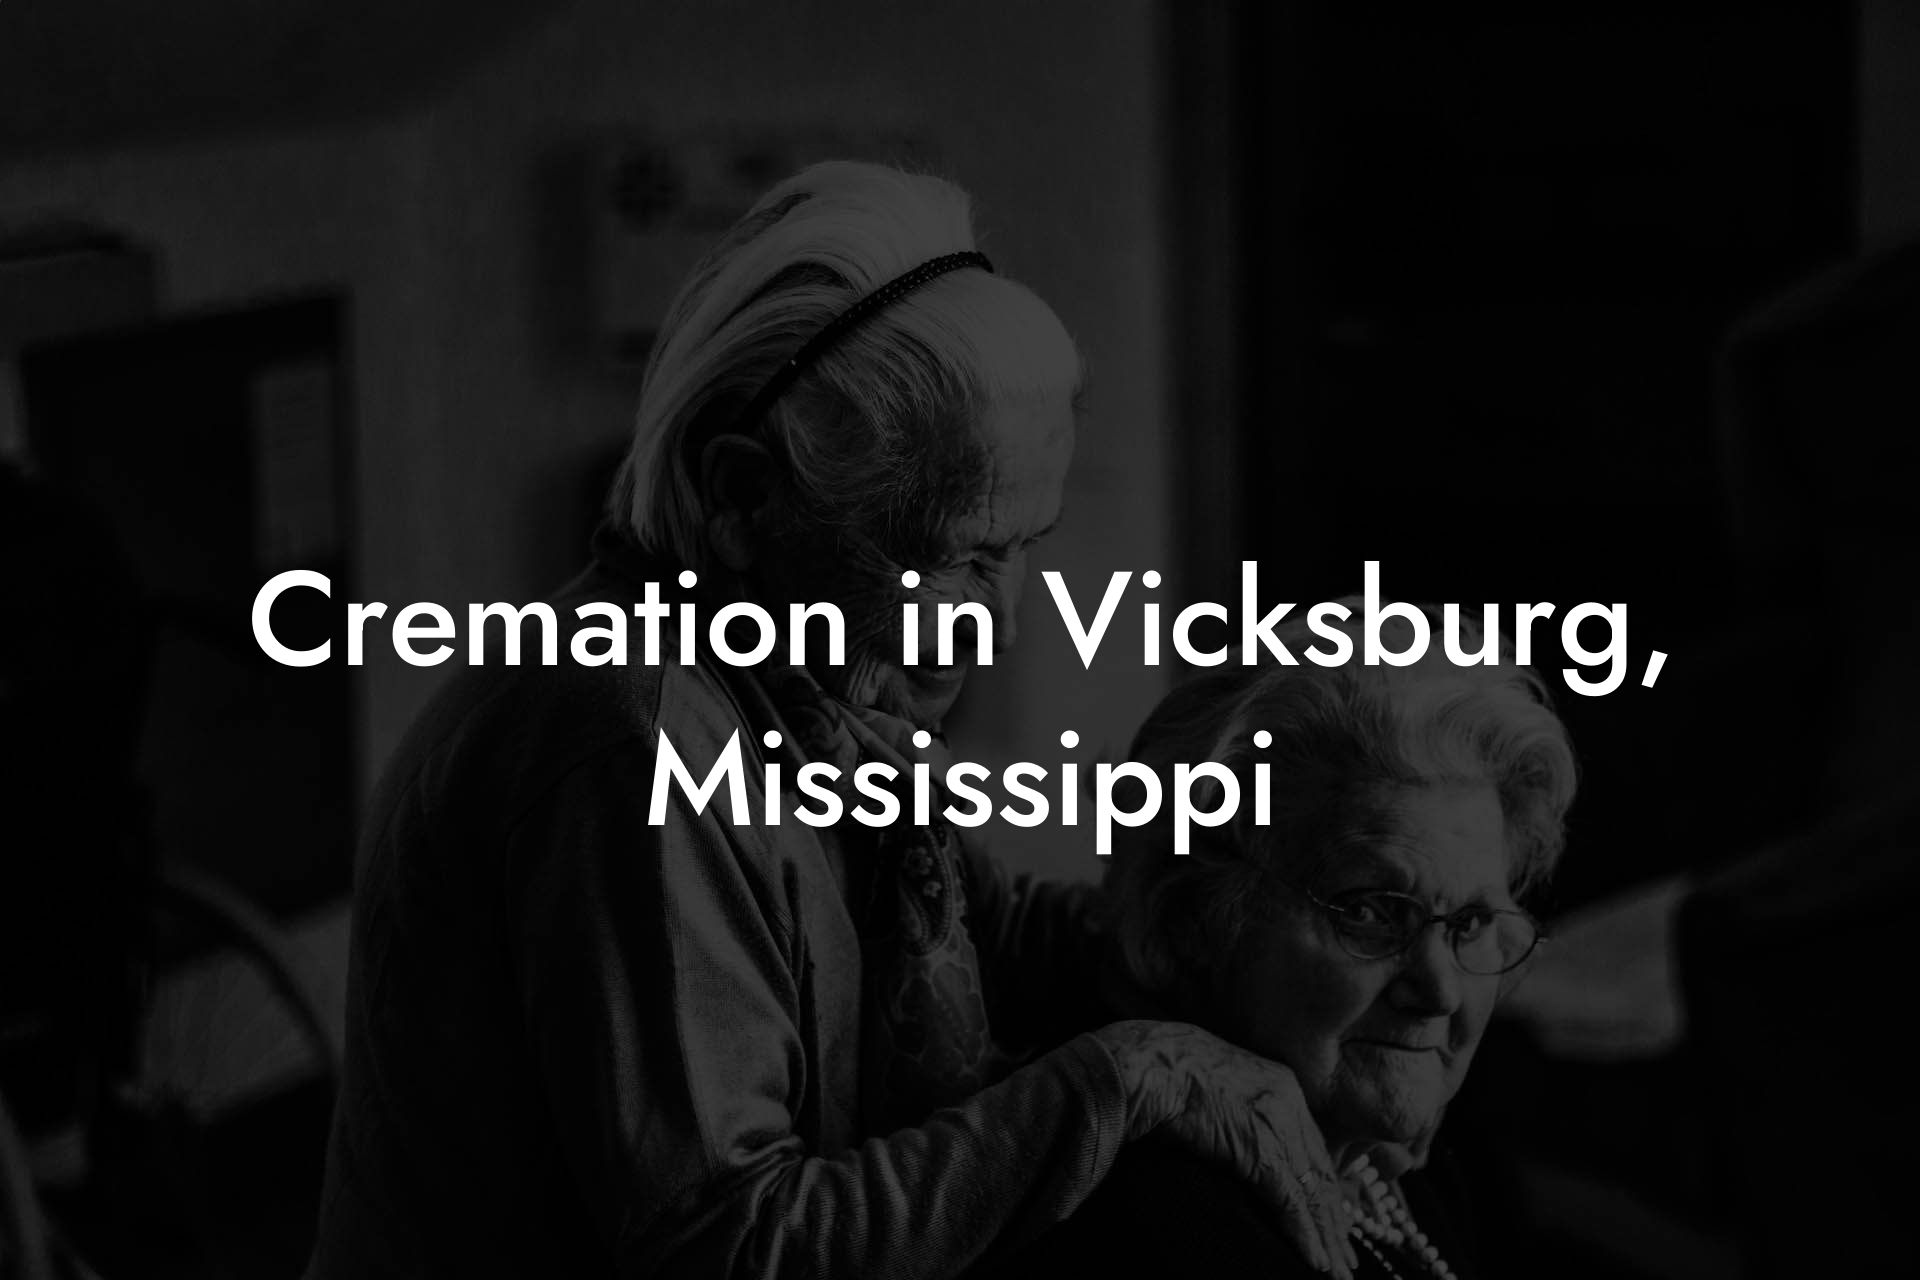 Cremation in Vicksburg, Mississippi